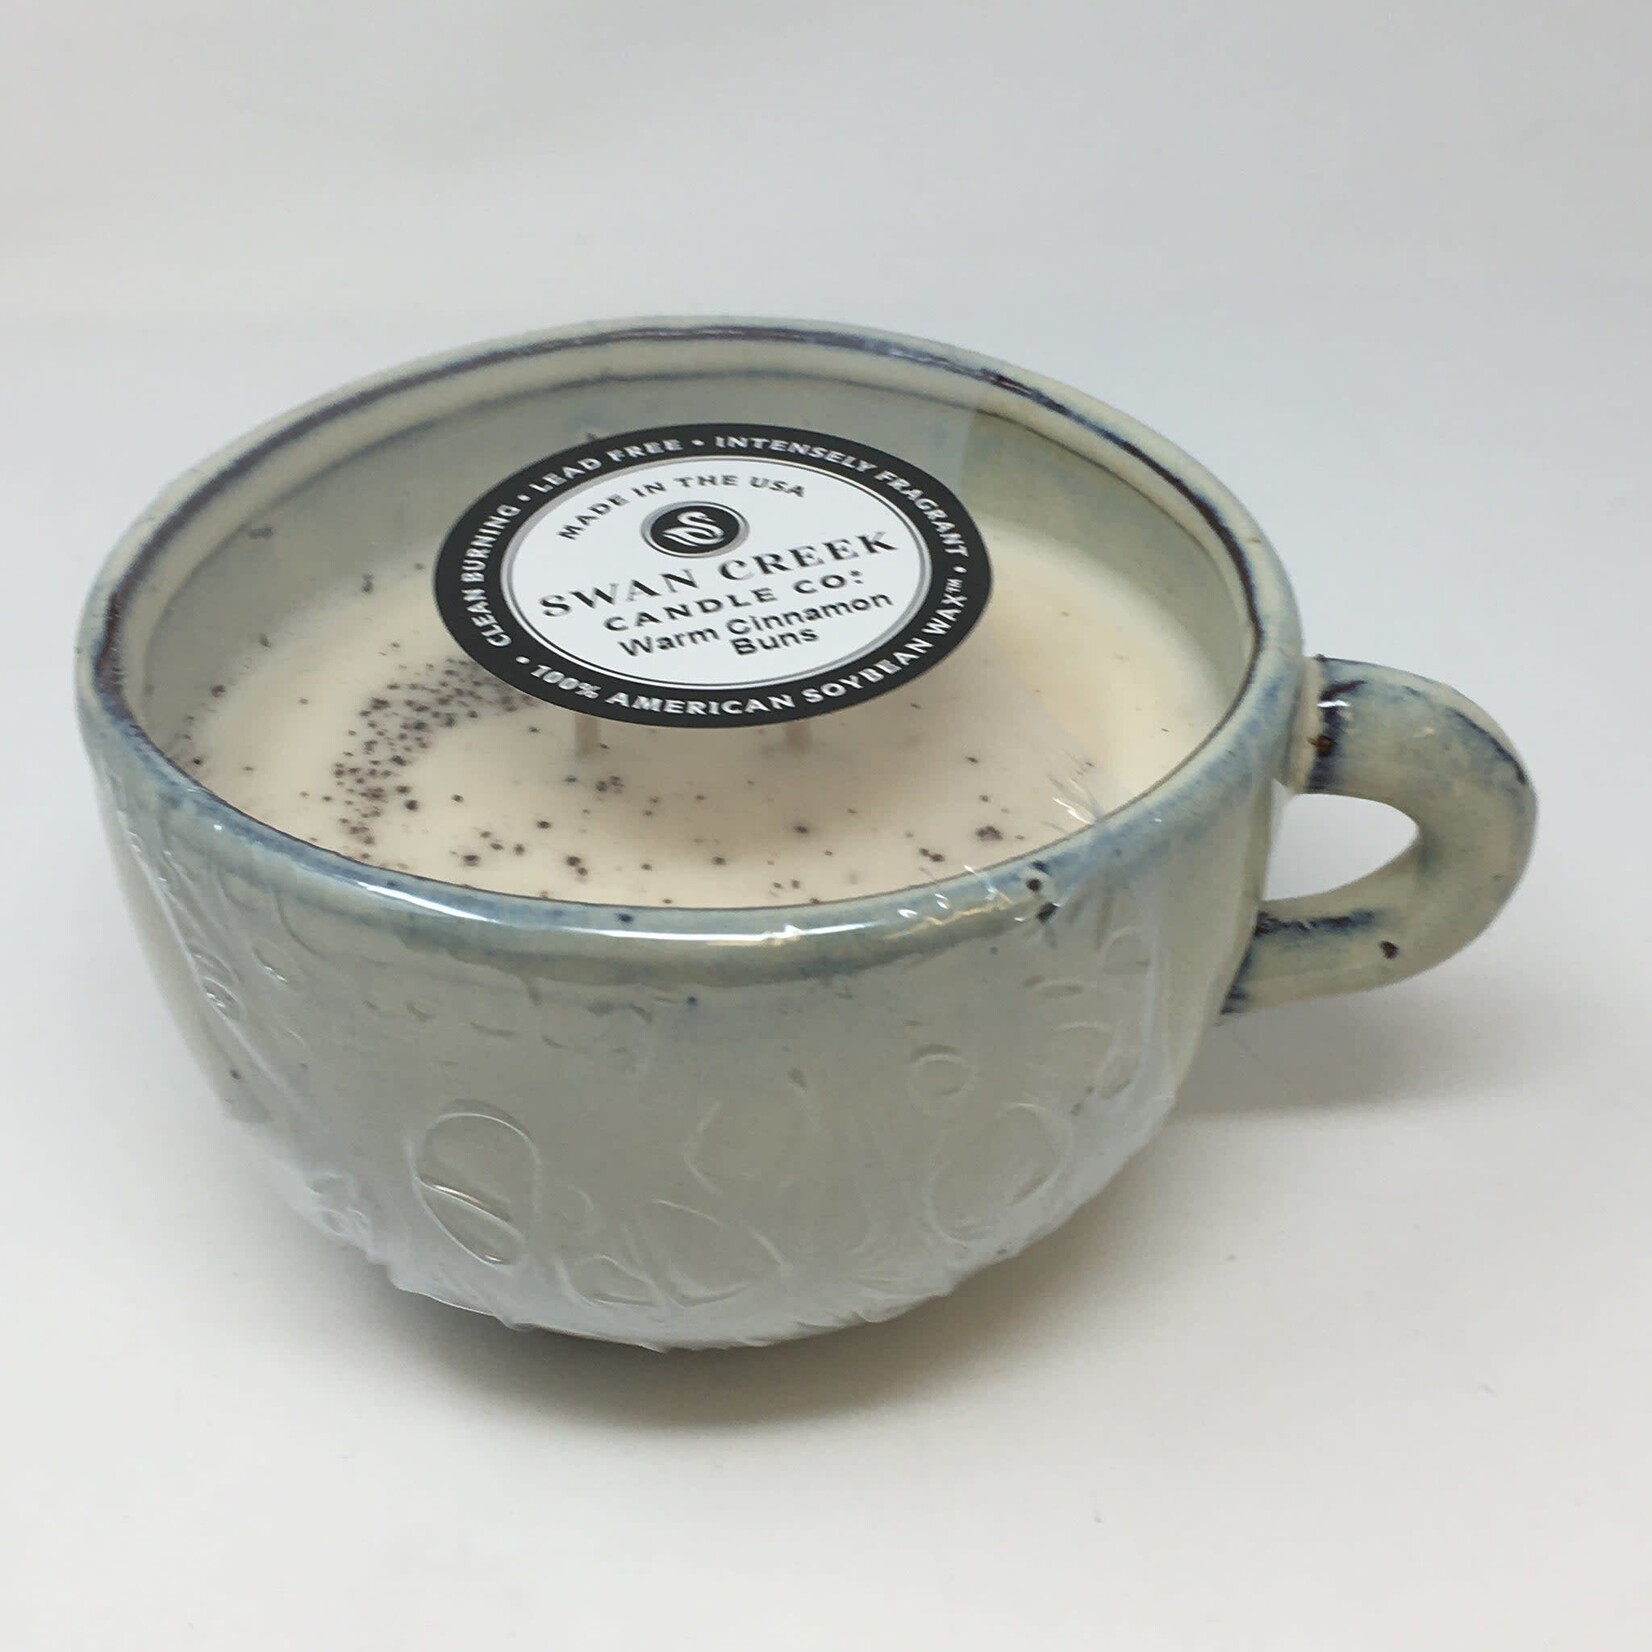 Swan Creek Swan Creek Warm Cinnamon Buns Coffee Cup Candle 15oz